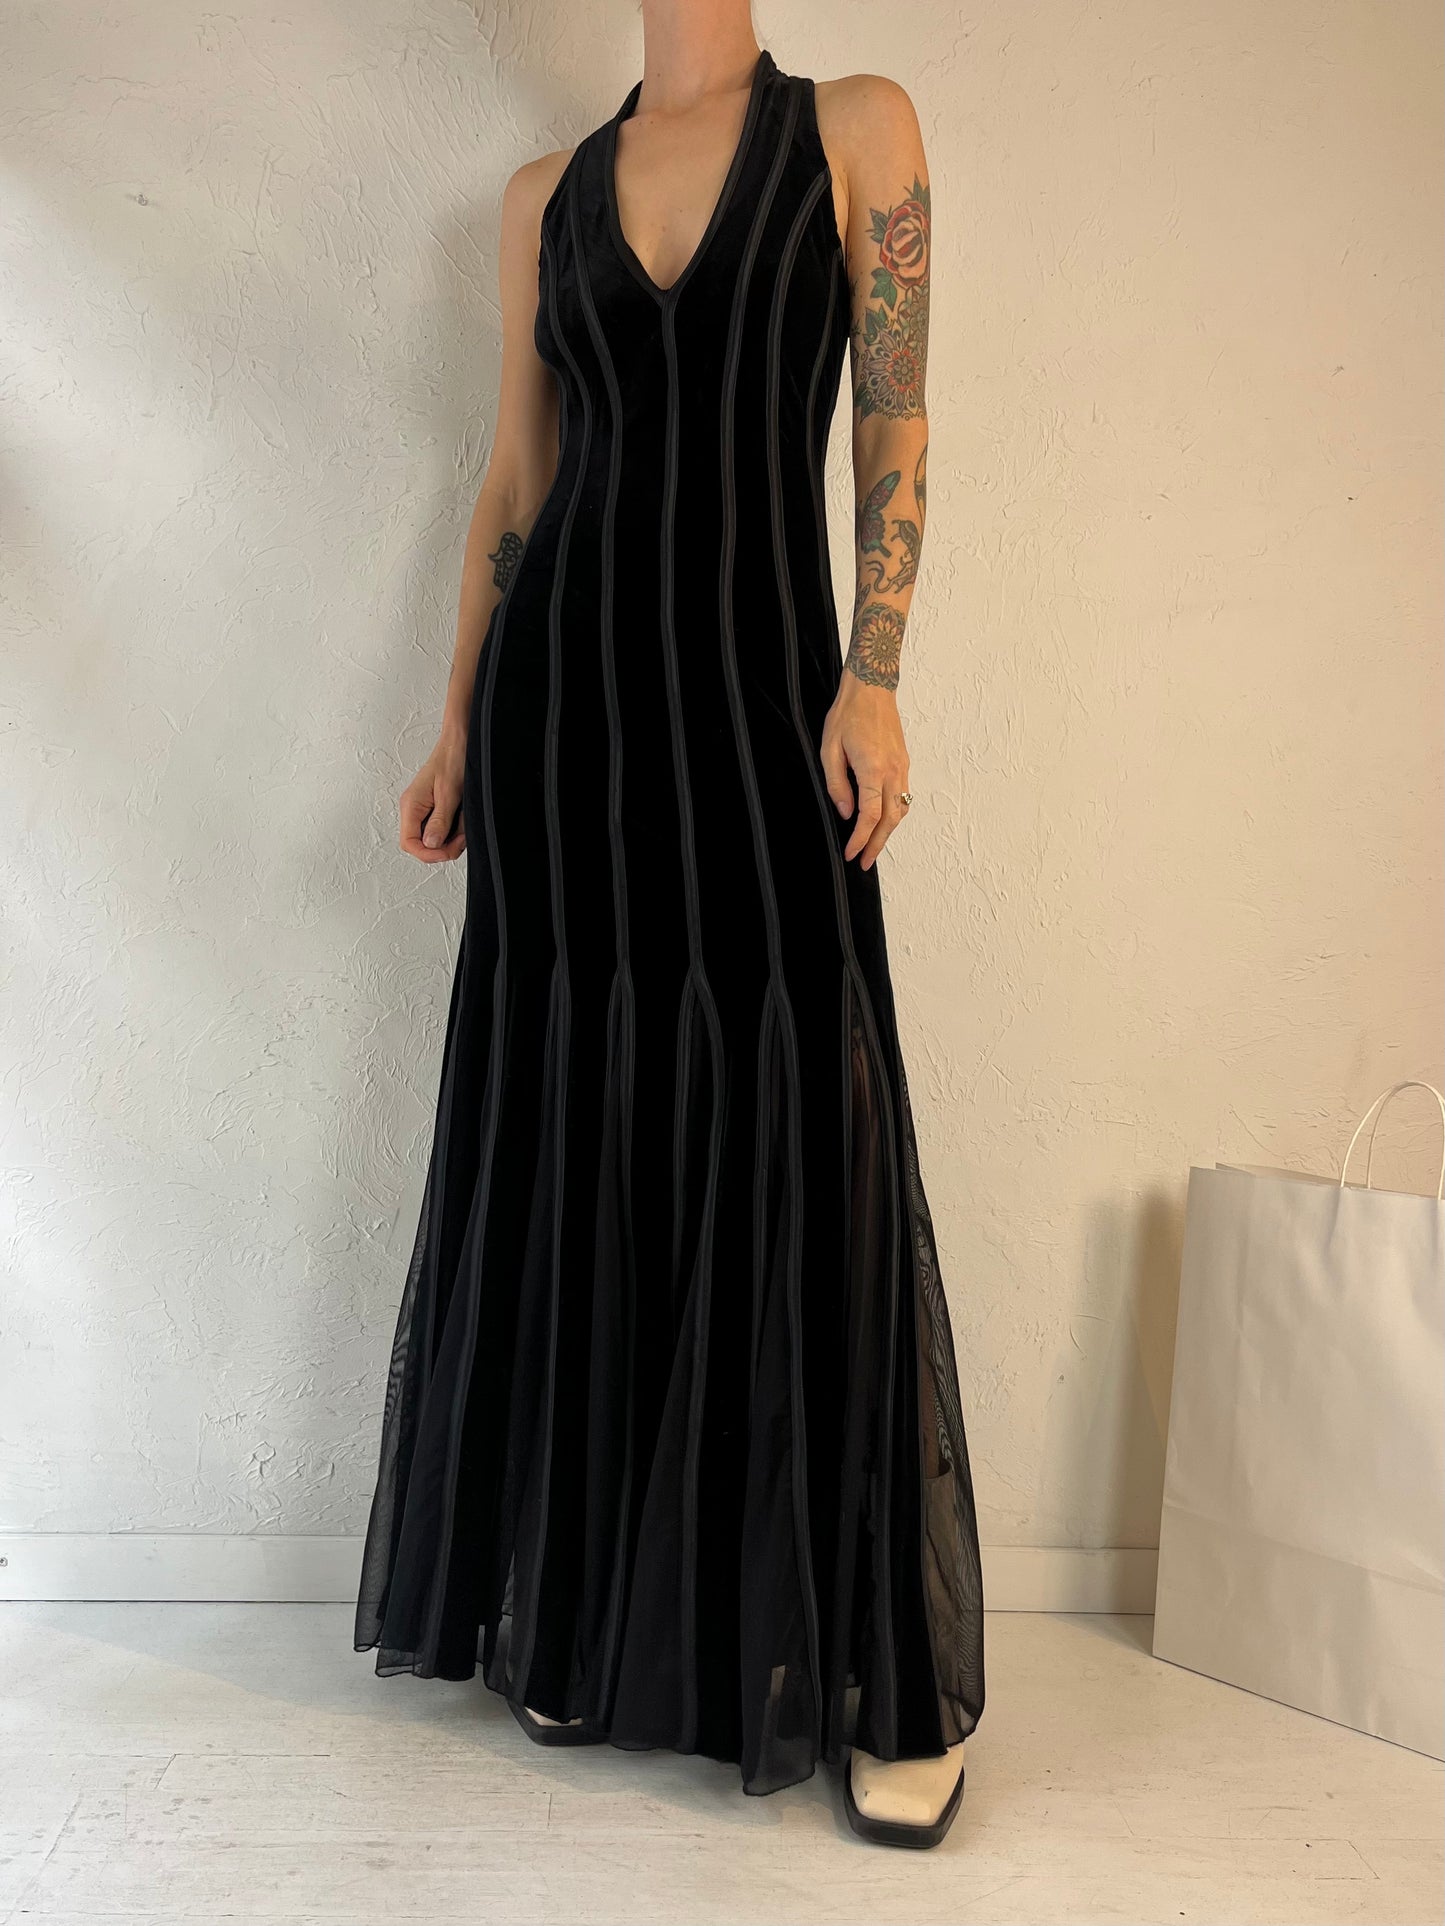 Y2k 'Bellissima' Black Velvet Evening Gown / Small - Medium